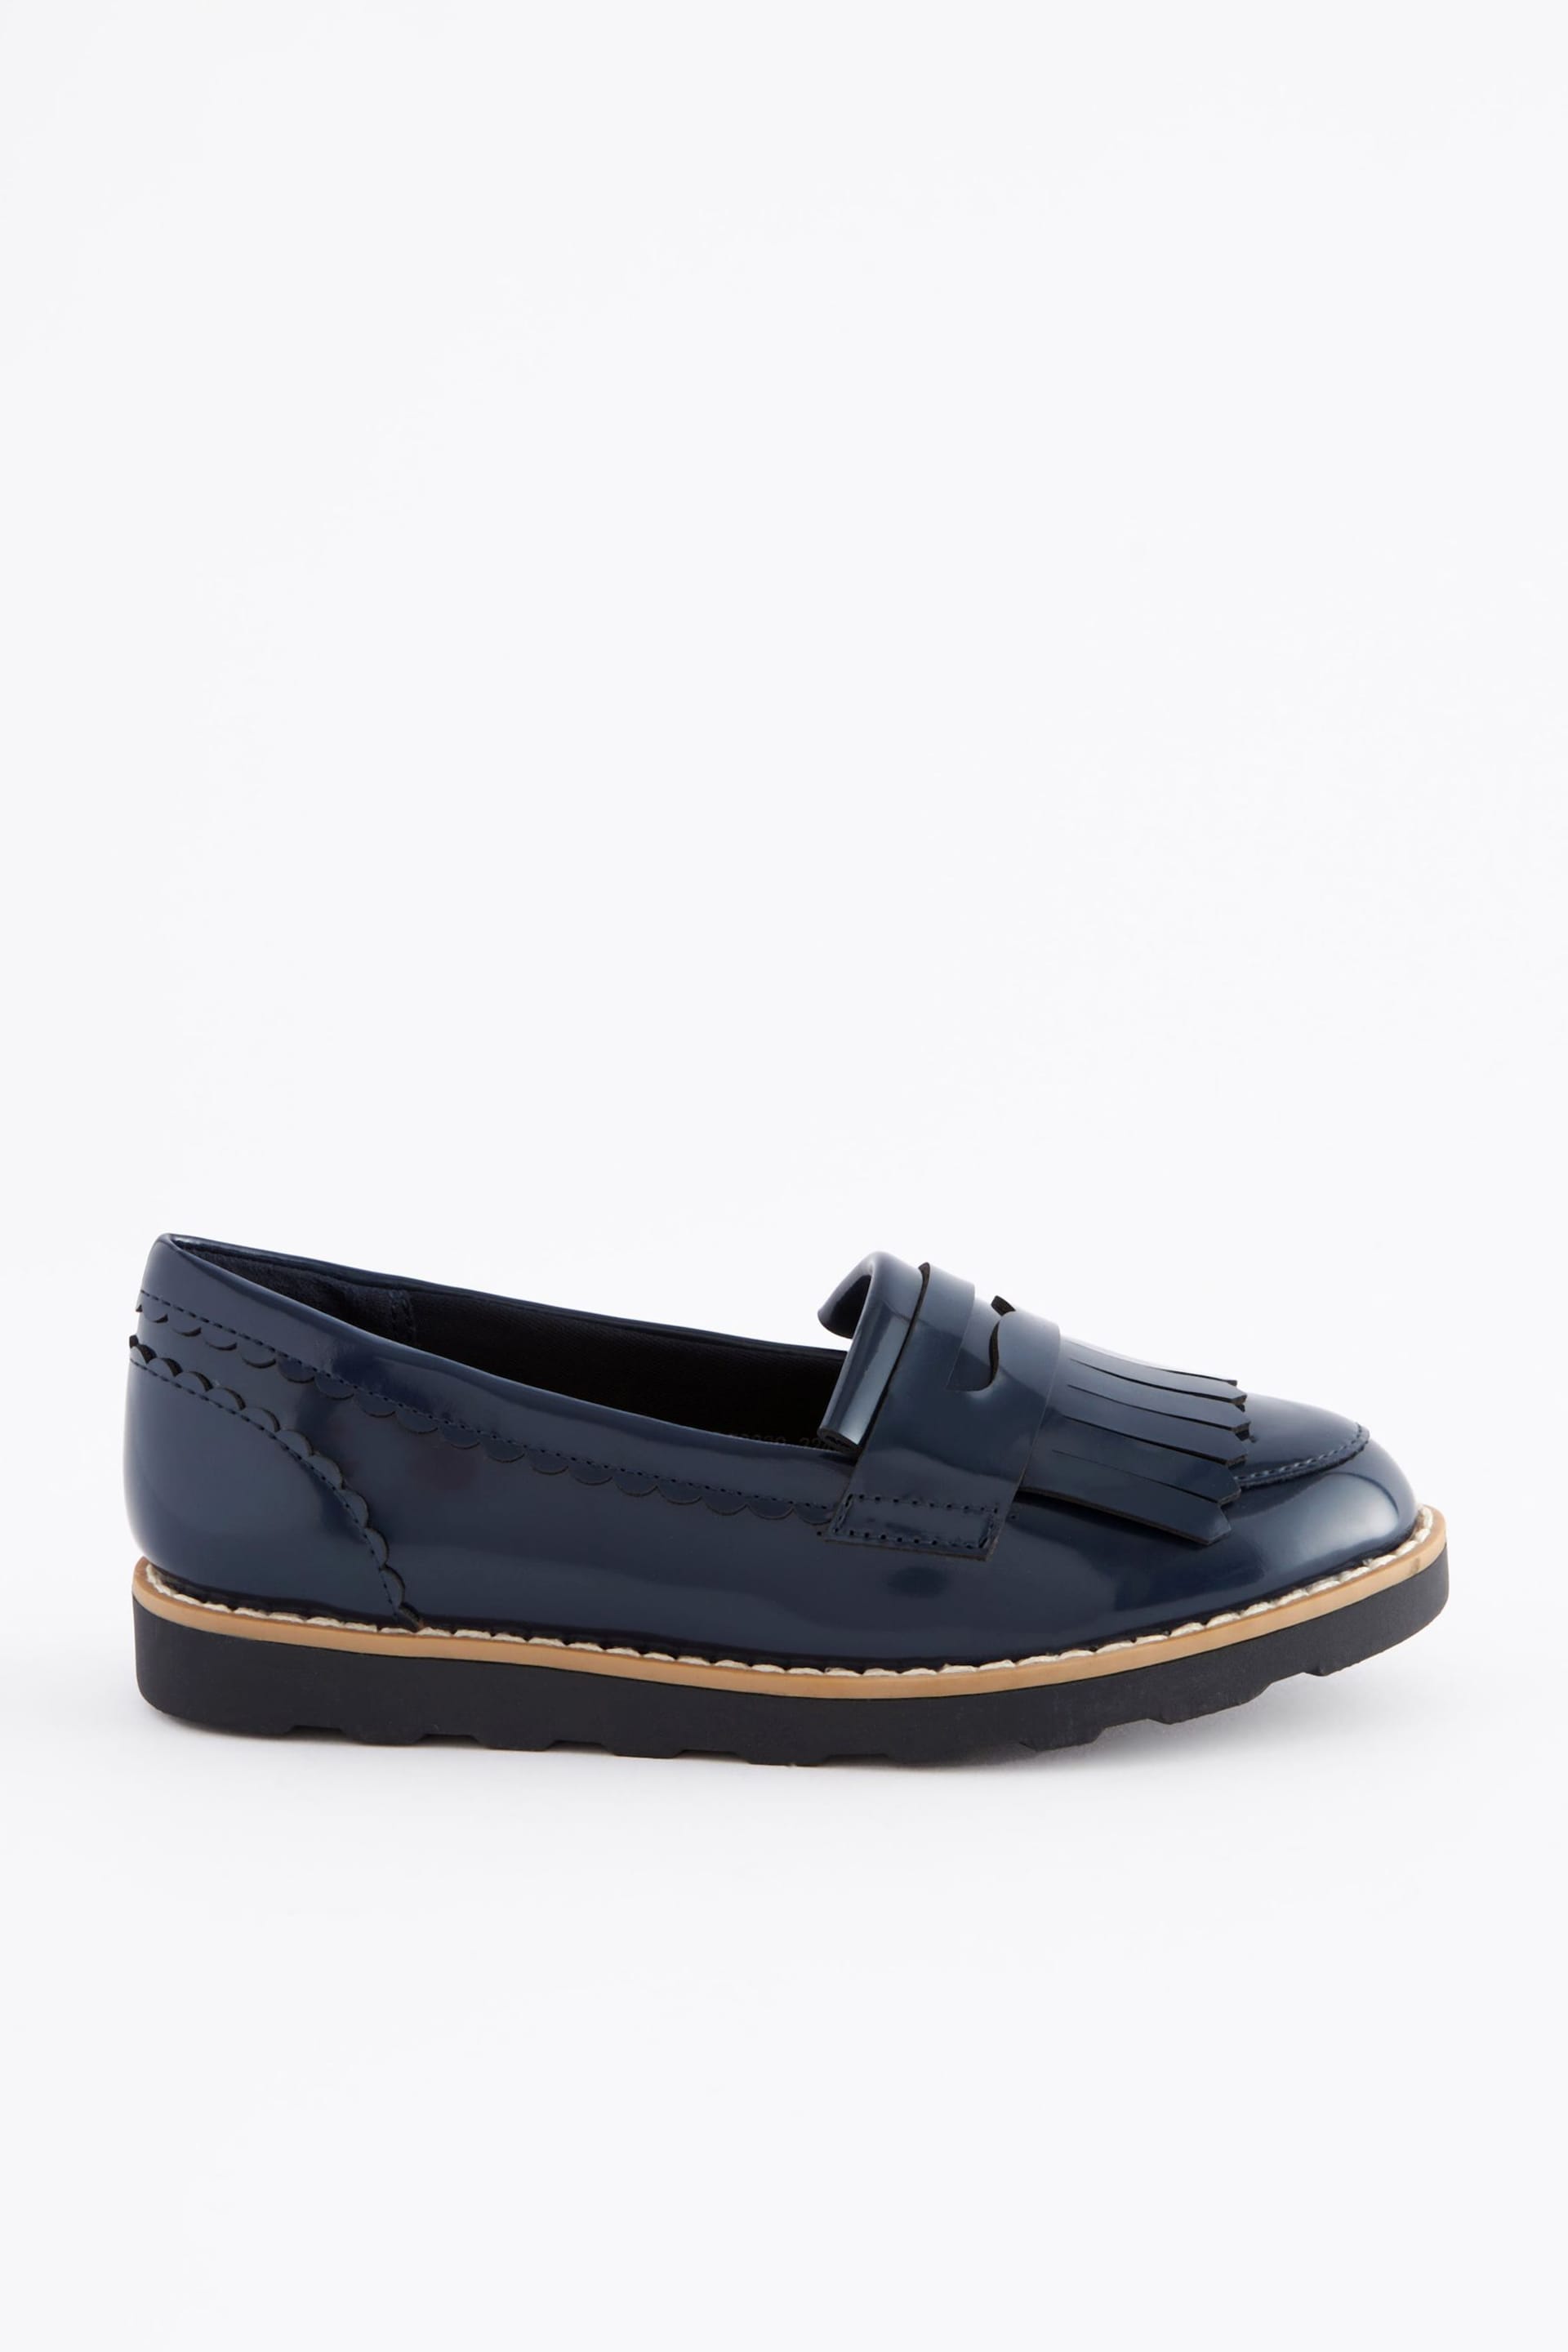 Navy Blue Standard Fit (F) School Tassel Loafers - Image 2 of 5